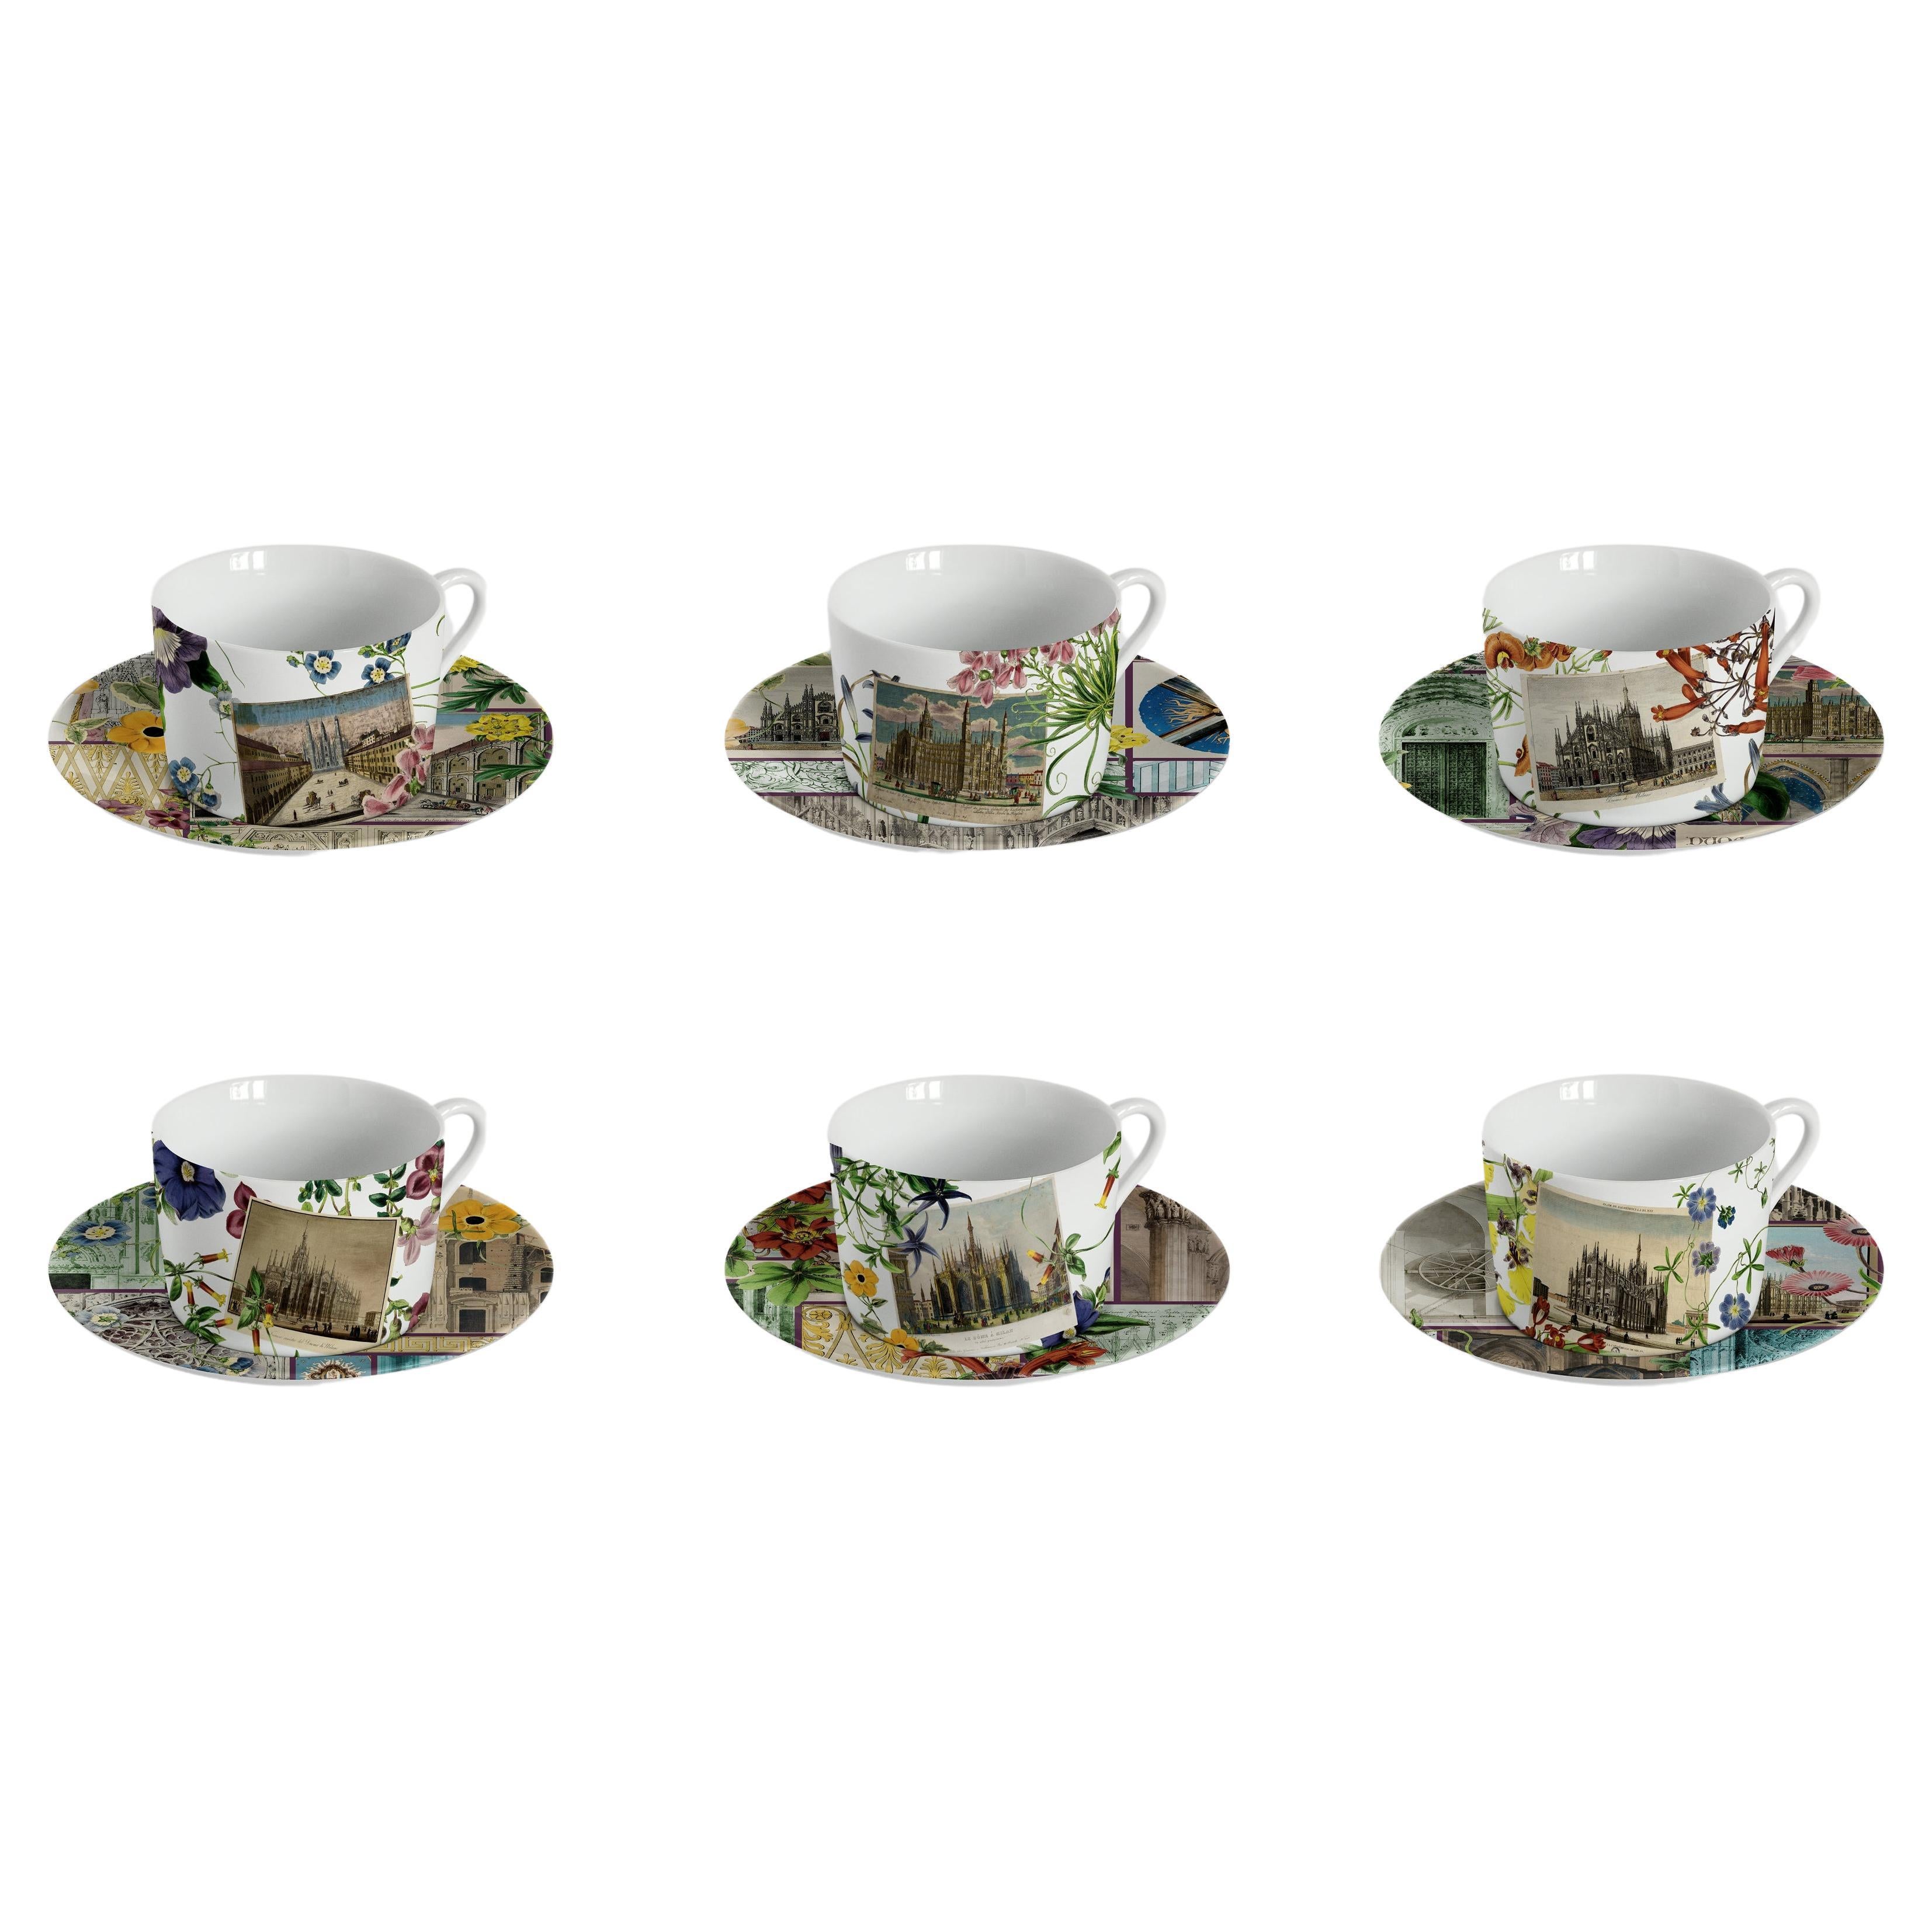 La storia Infinita, Six Contemporary Decorated Tea Cups with Plates For Sale